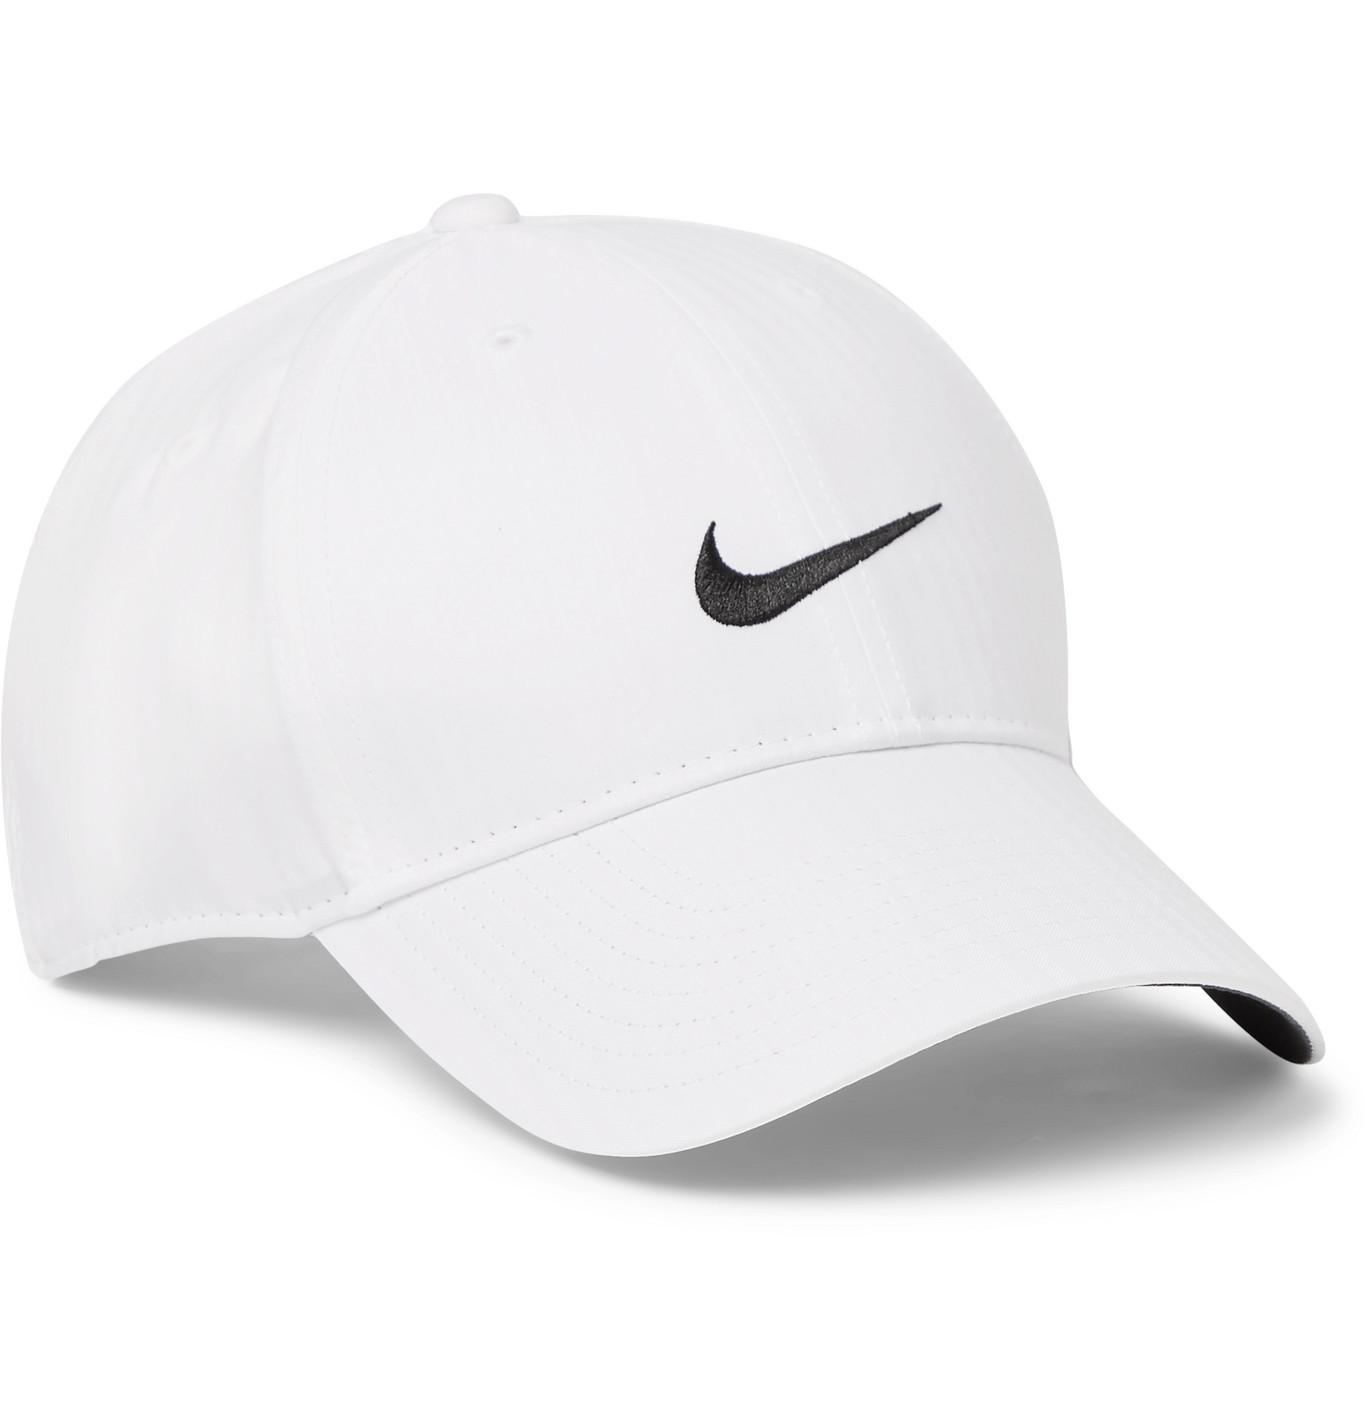 Nike Legacy91 Dri-fit Baseball Cap in White for Men - Lyst